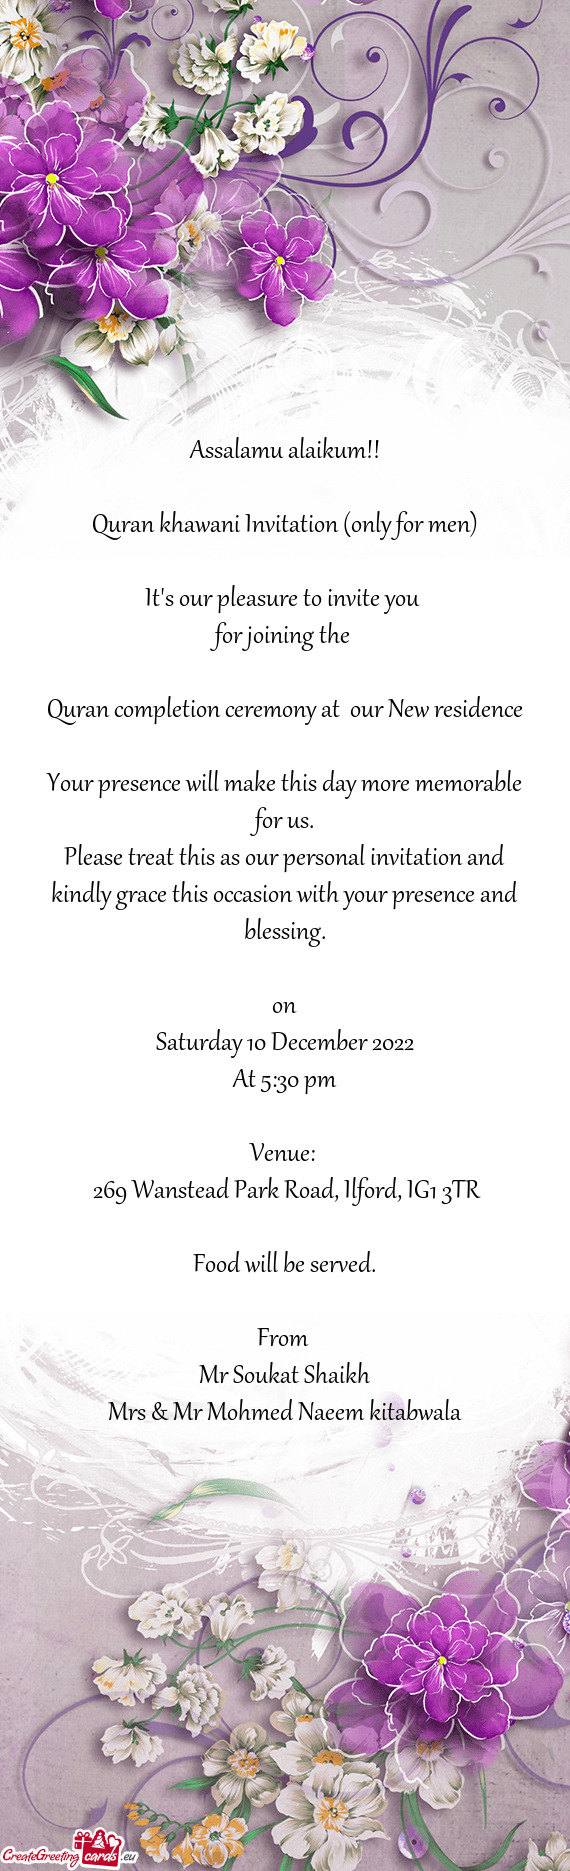 Quran khawani Invitation (only for men)